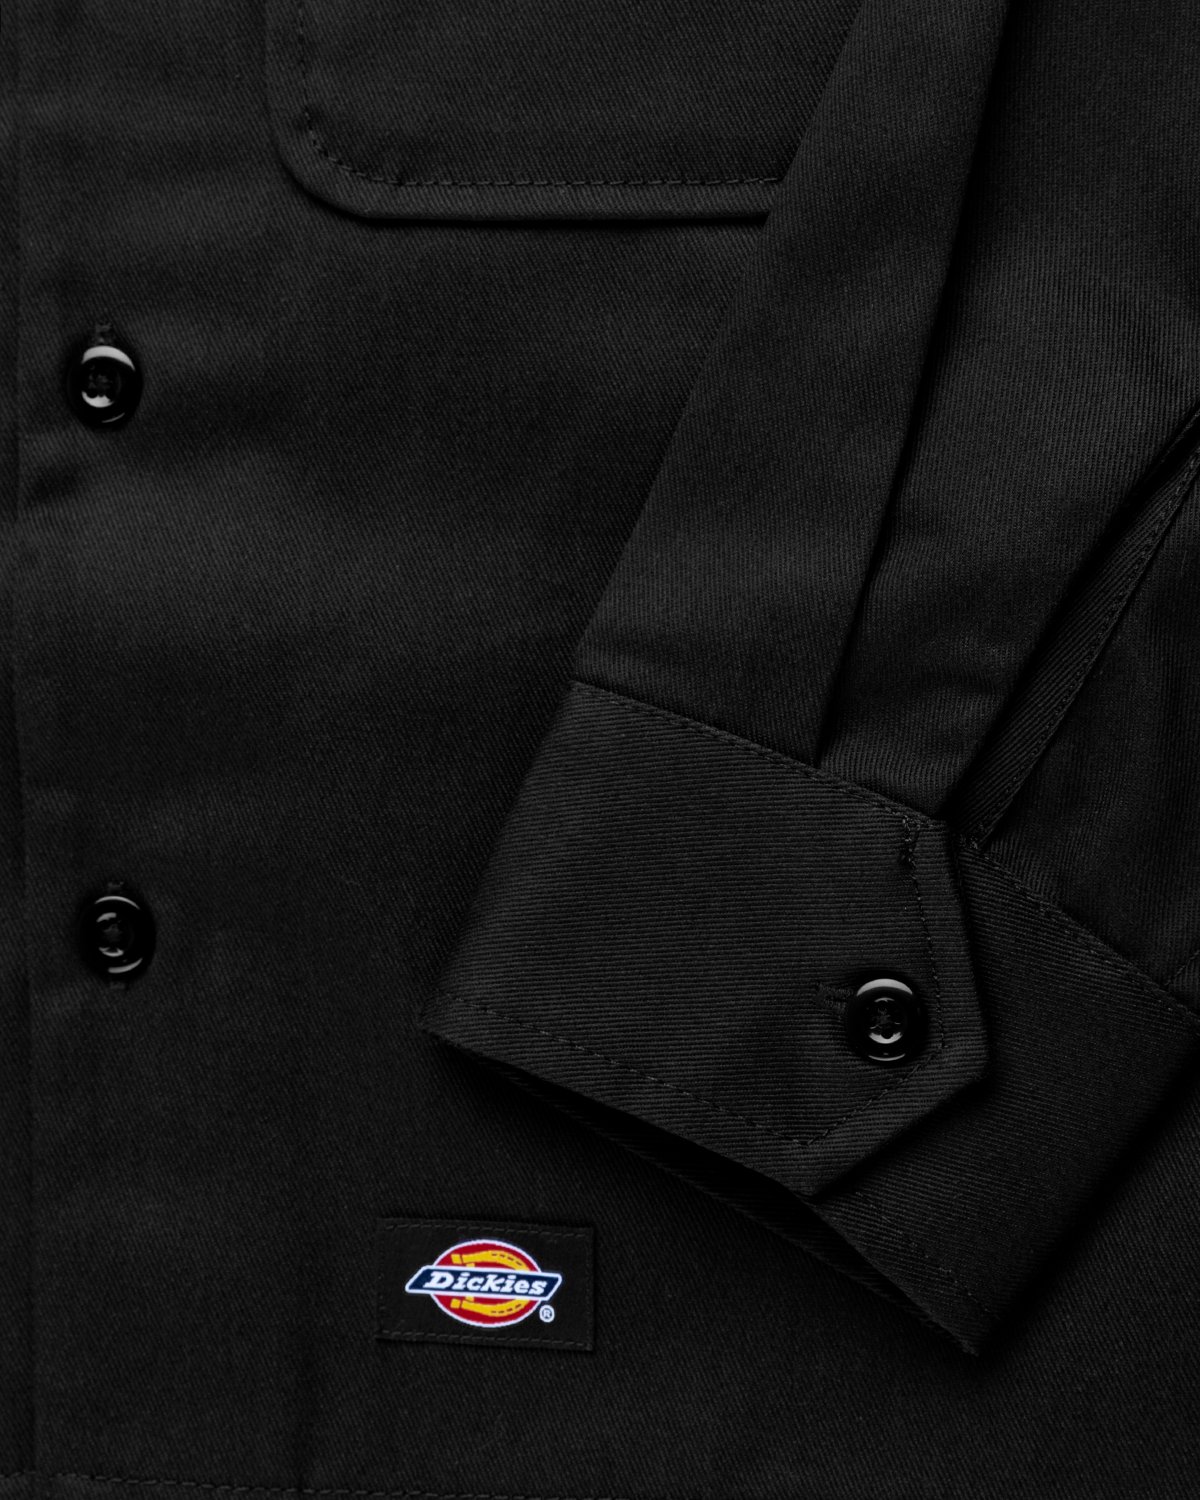 Highsnobiety x Dickies - Service Shirt Black - Clothing - Black - Image 4